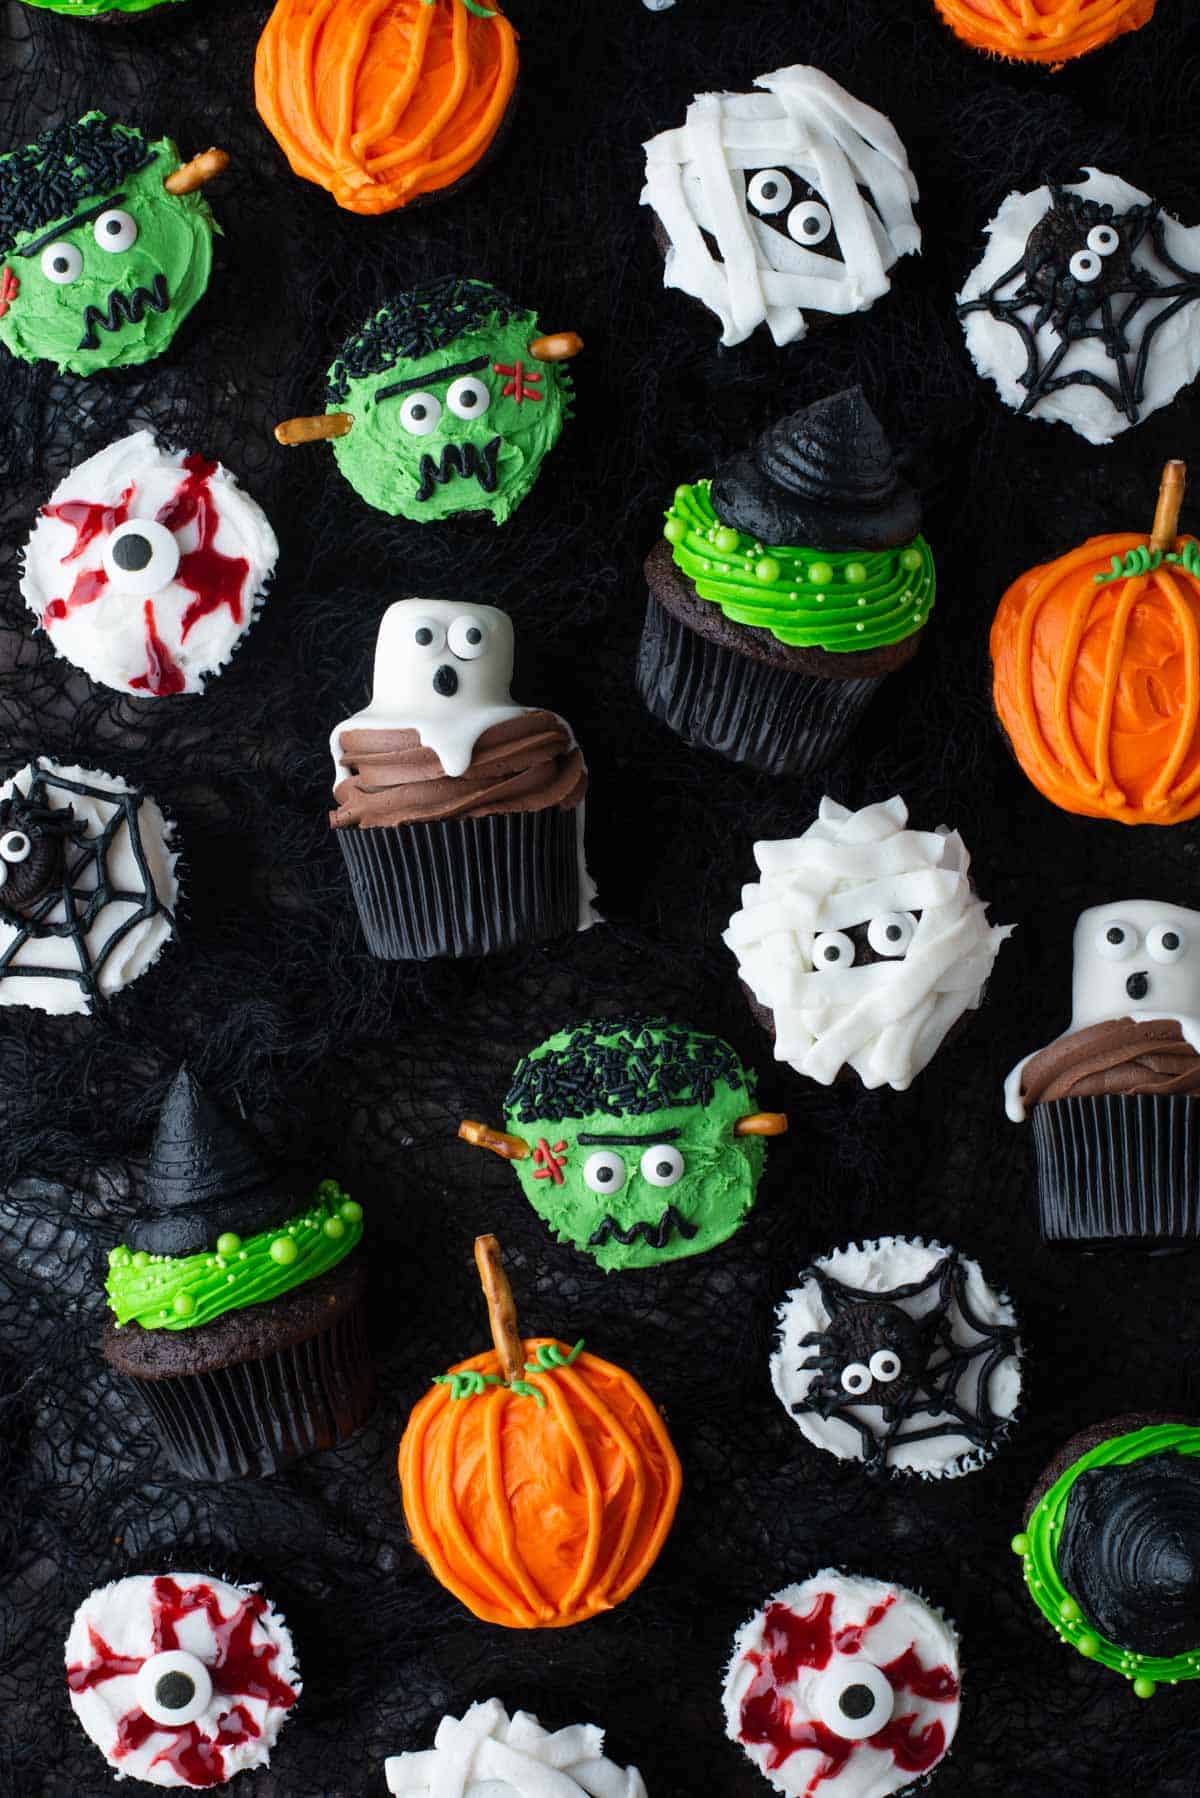 assortment of halloween cupcakes including ghost cupcakes, eyeball cupcakes, mummy cupcakes, pumpkin cupcakes, witch hat cupcakes, and spider cupcakes